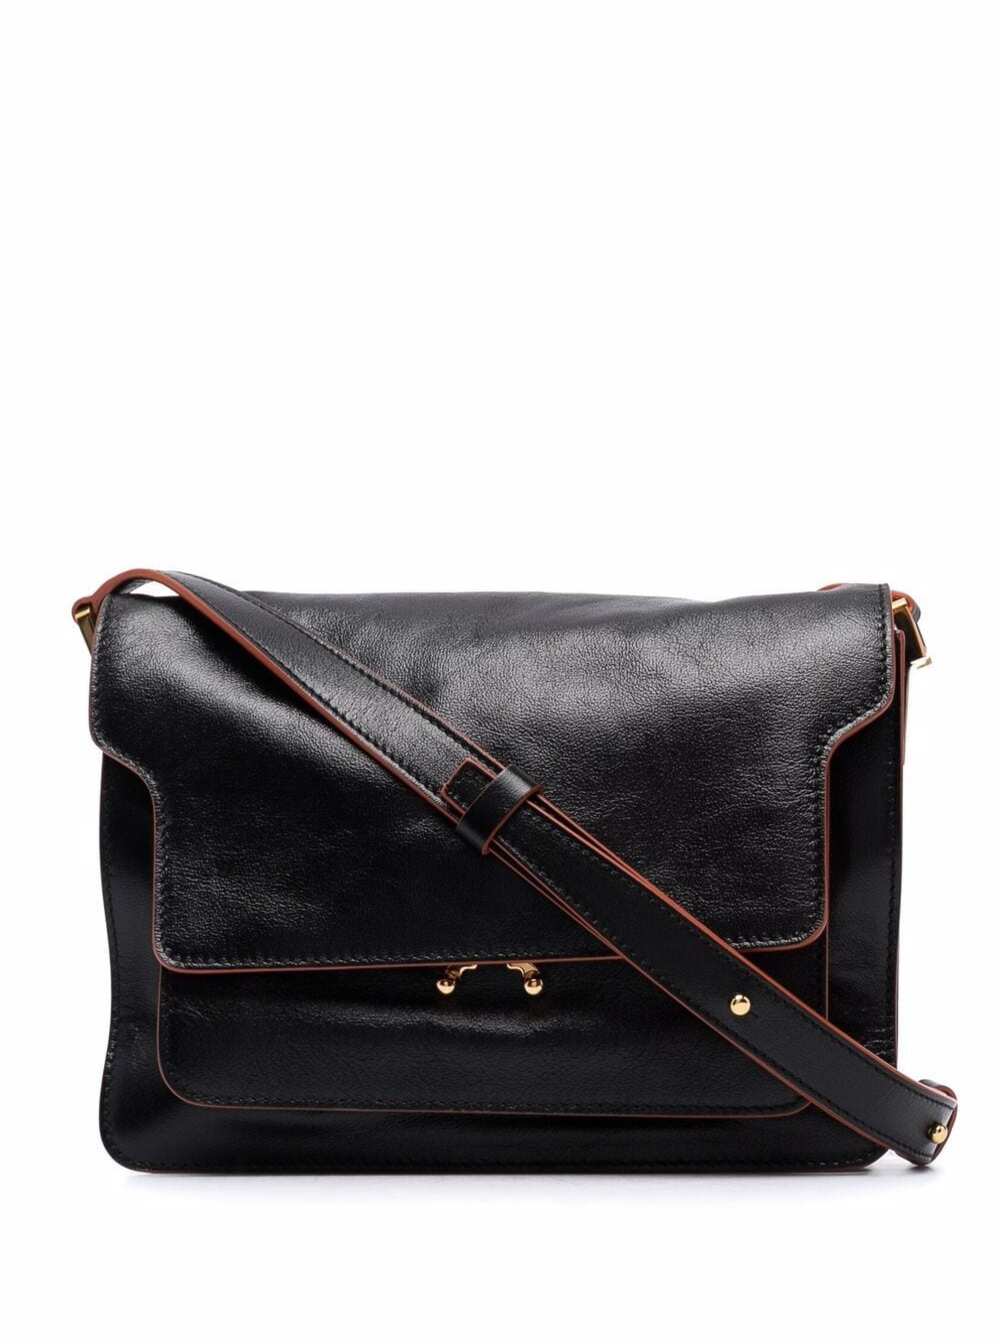 Marni Trunk Soft Black Leather Crossbody Bag